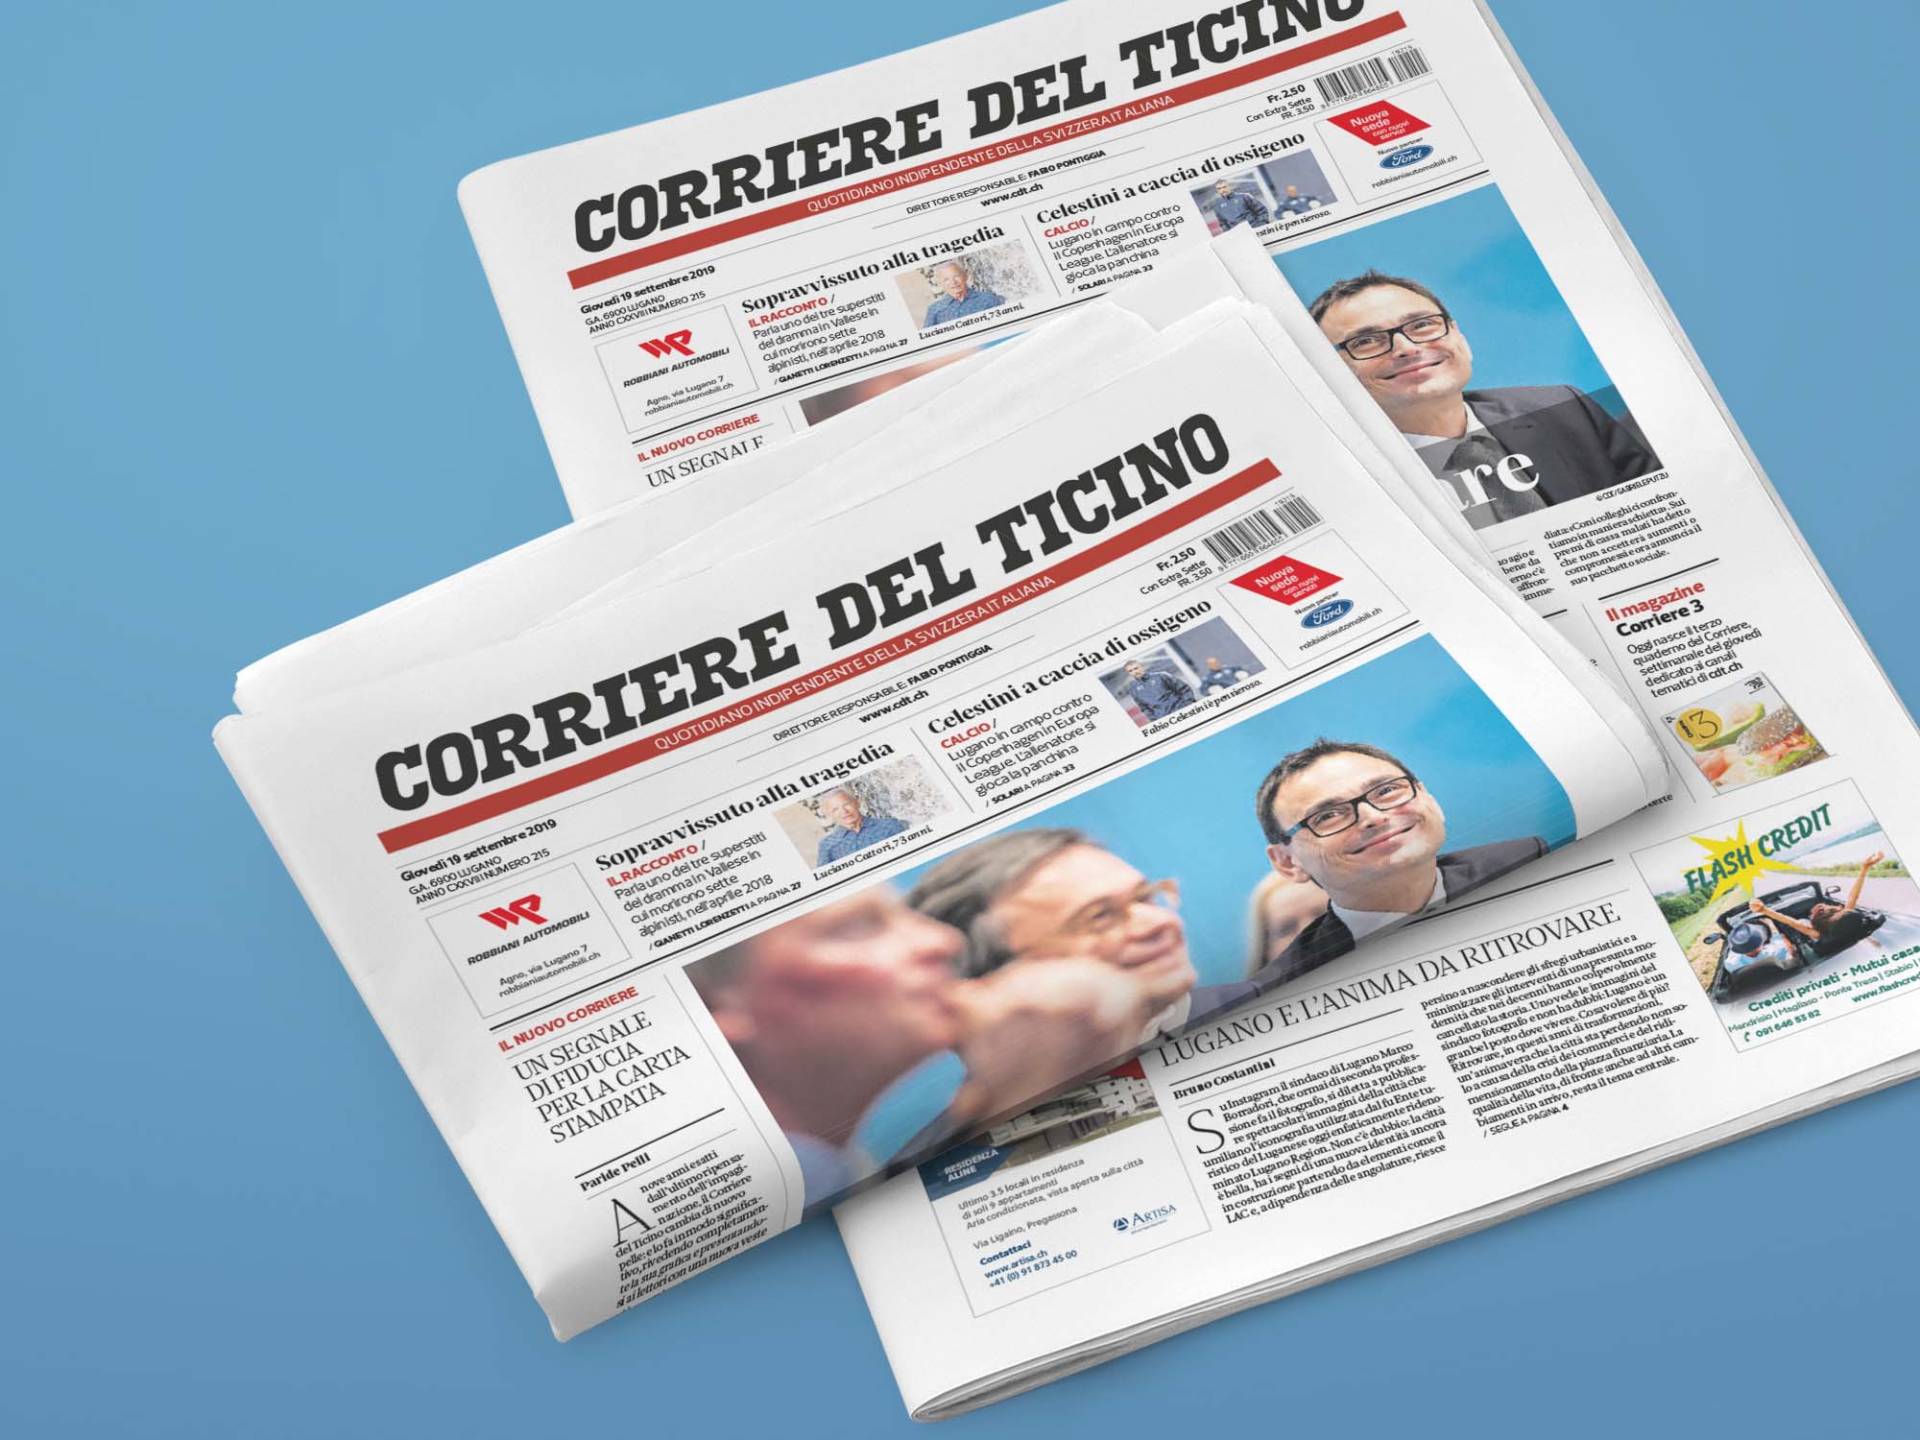 Corriere_Del_Ticino_01_Wenceslau_News_Design